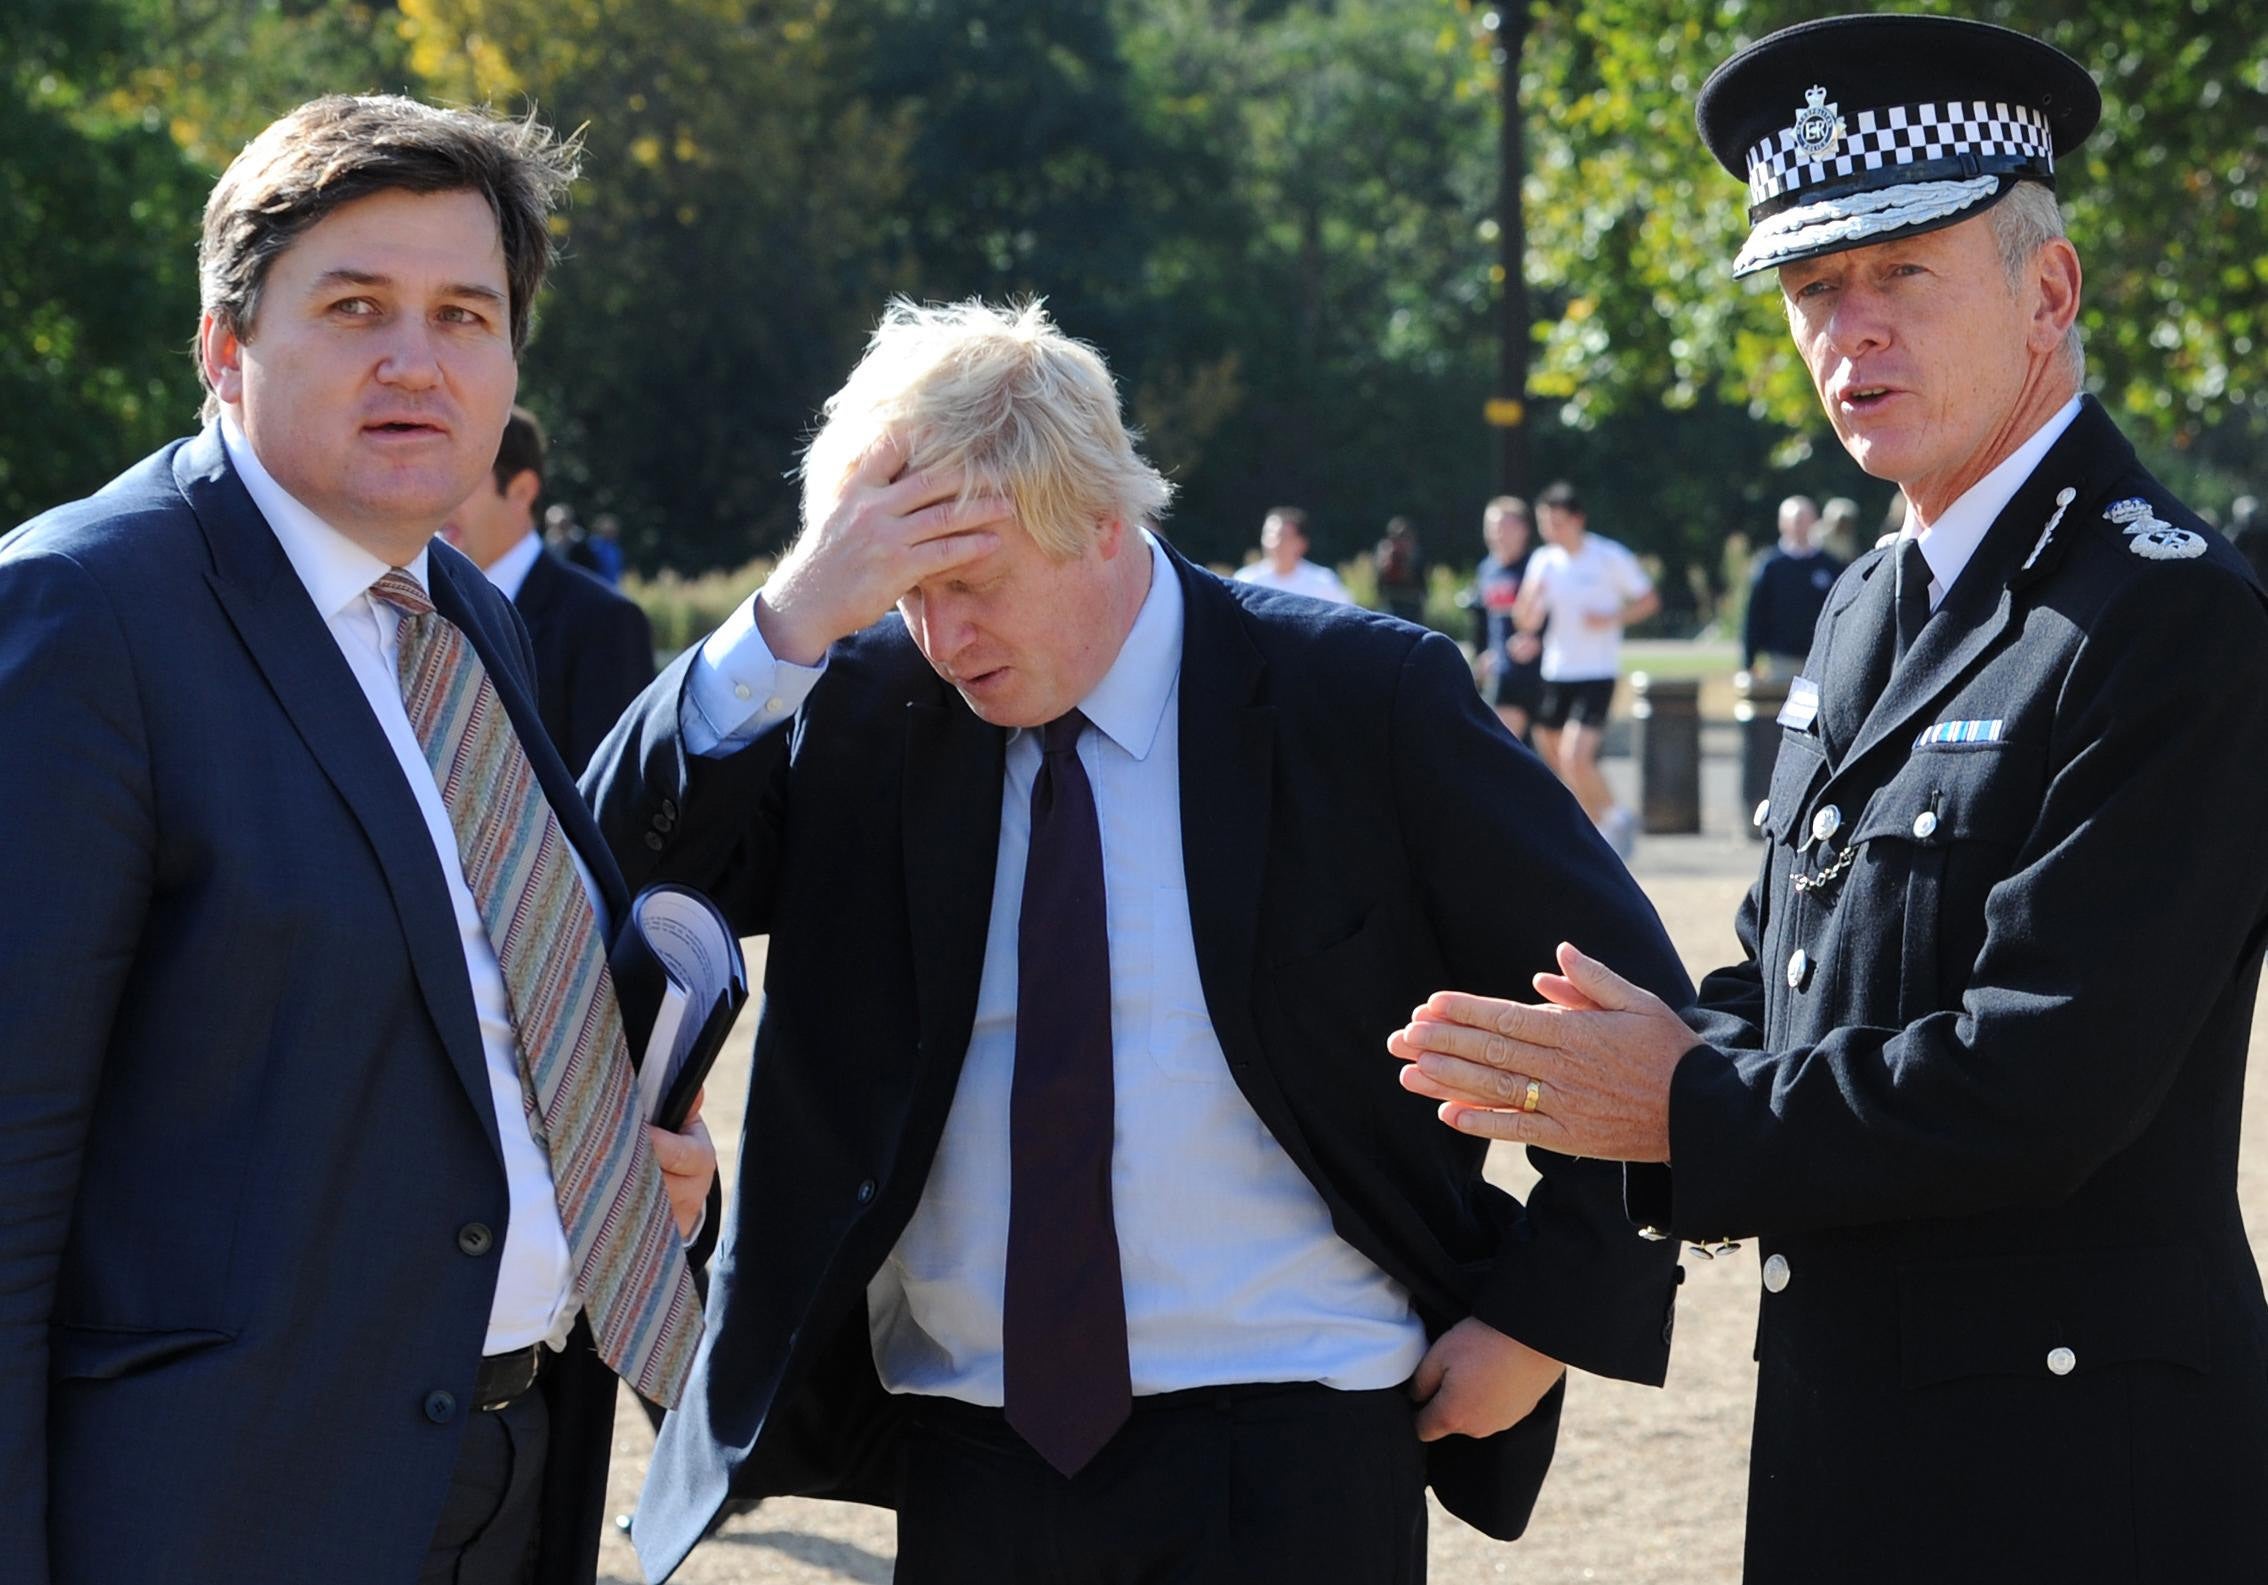 Kit Malthouse served as London’s deputy mayor for crime under Boris Johnson